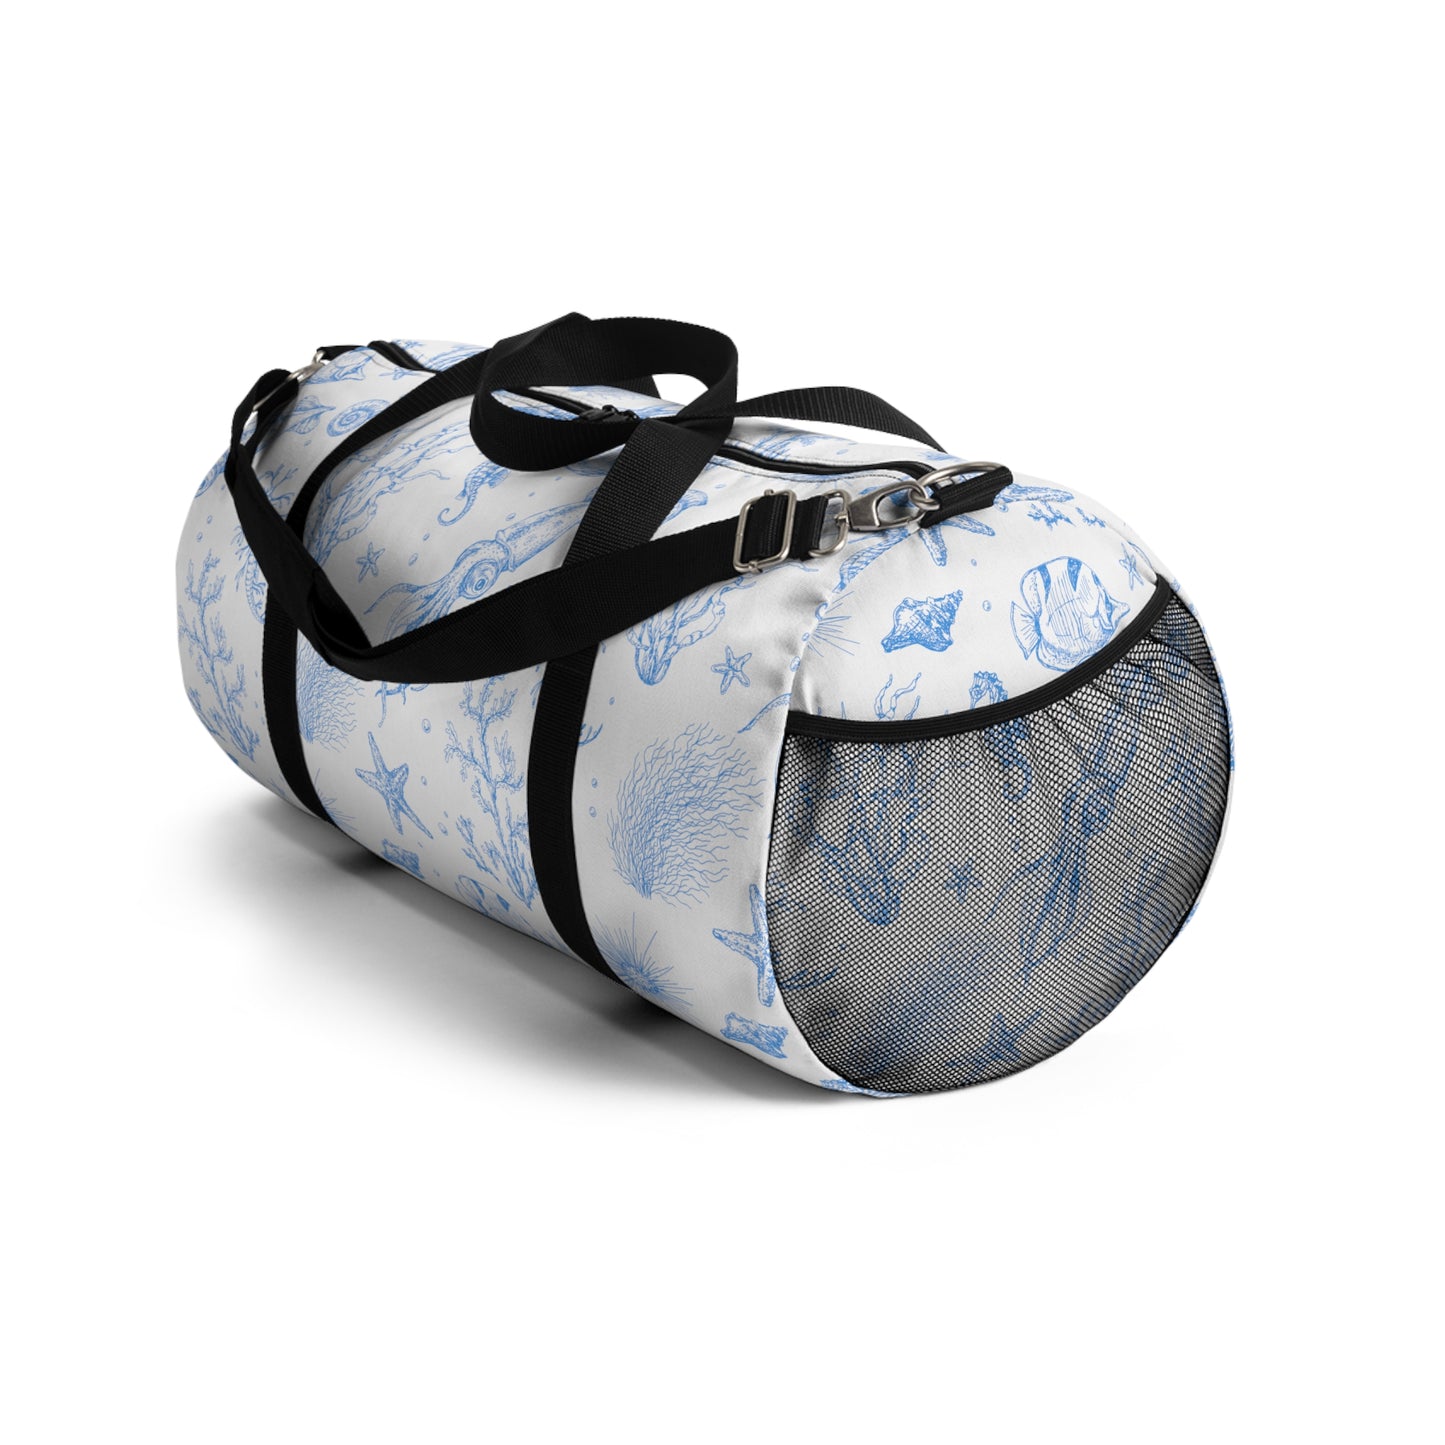 'Under the Sea' Duffel Bag (2 sizes)